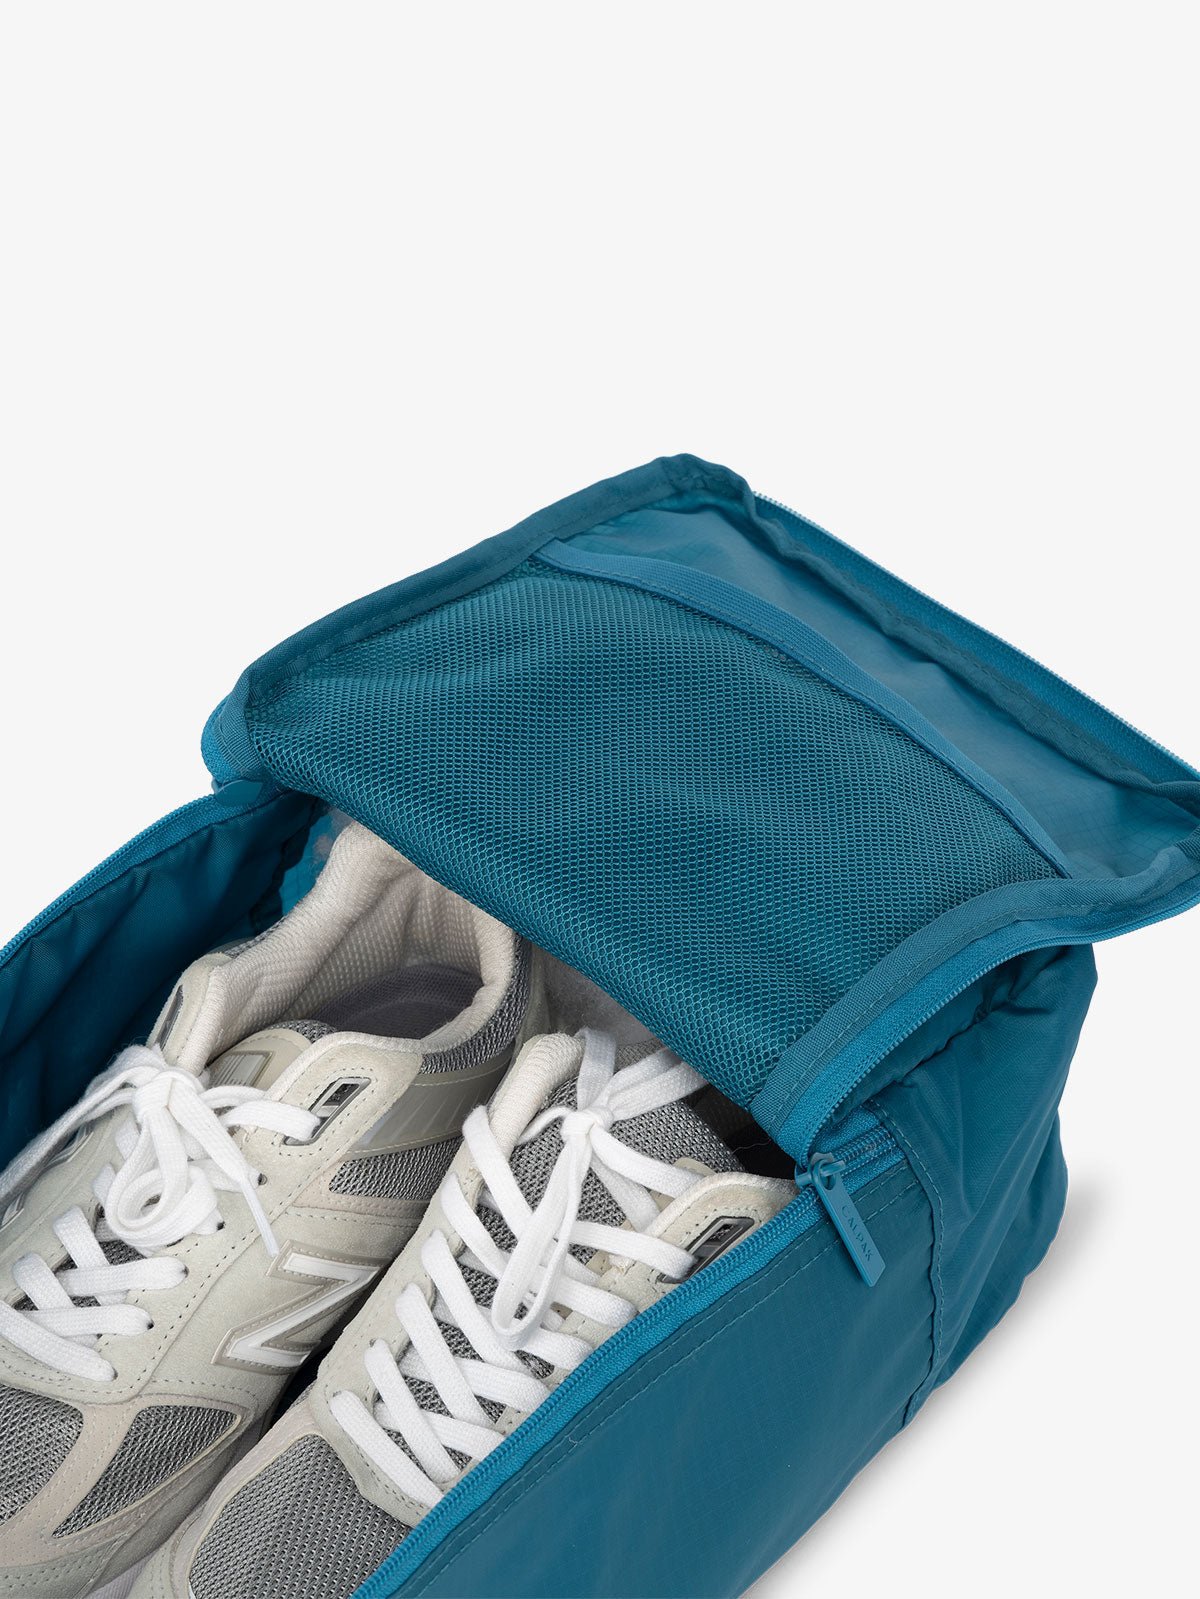 CALPAK Compakt zippered shoe travel bag with mesh pocket in blue